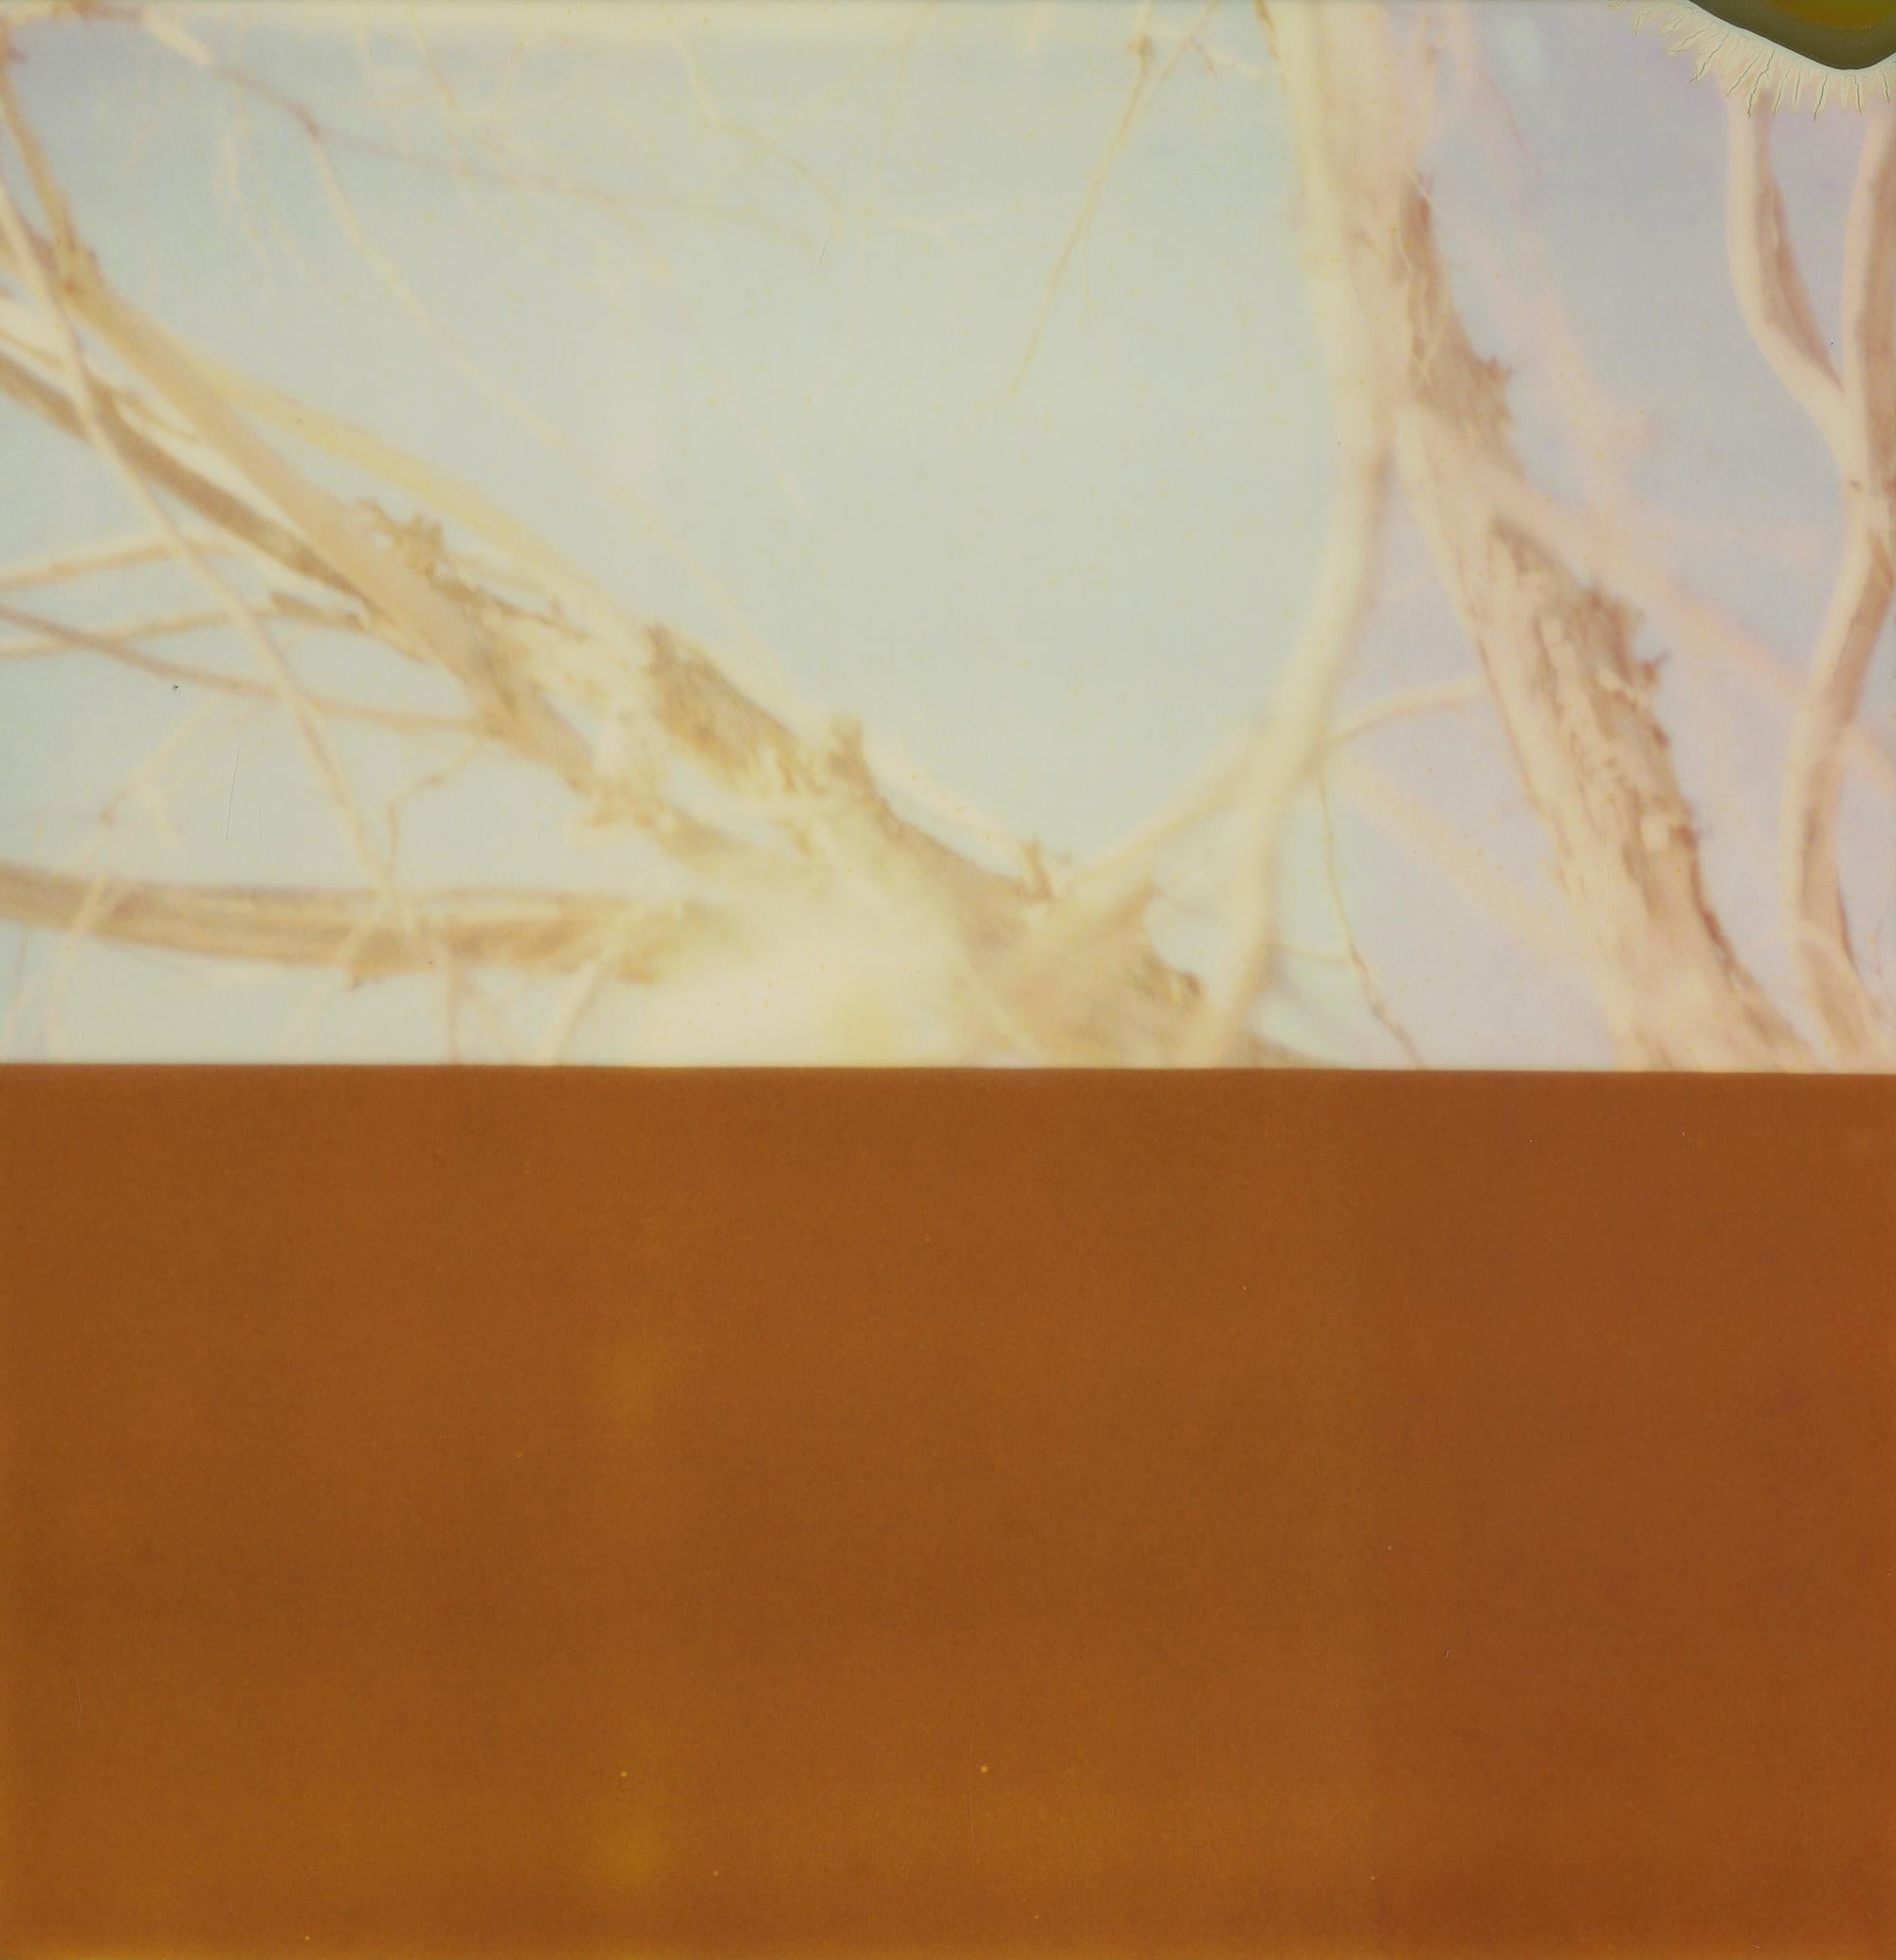 Stefanie Schneider Abstract Photograph - Summer Interlude II (Deconstructivism) - Contemporary, Expired Polaroid